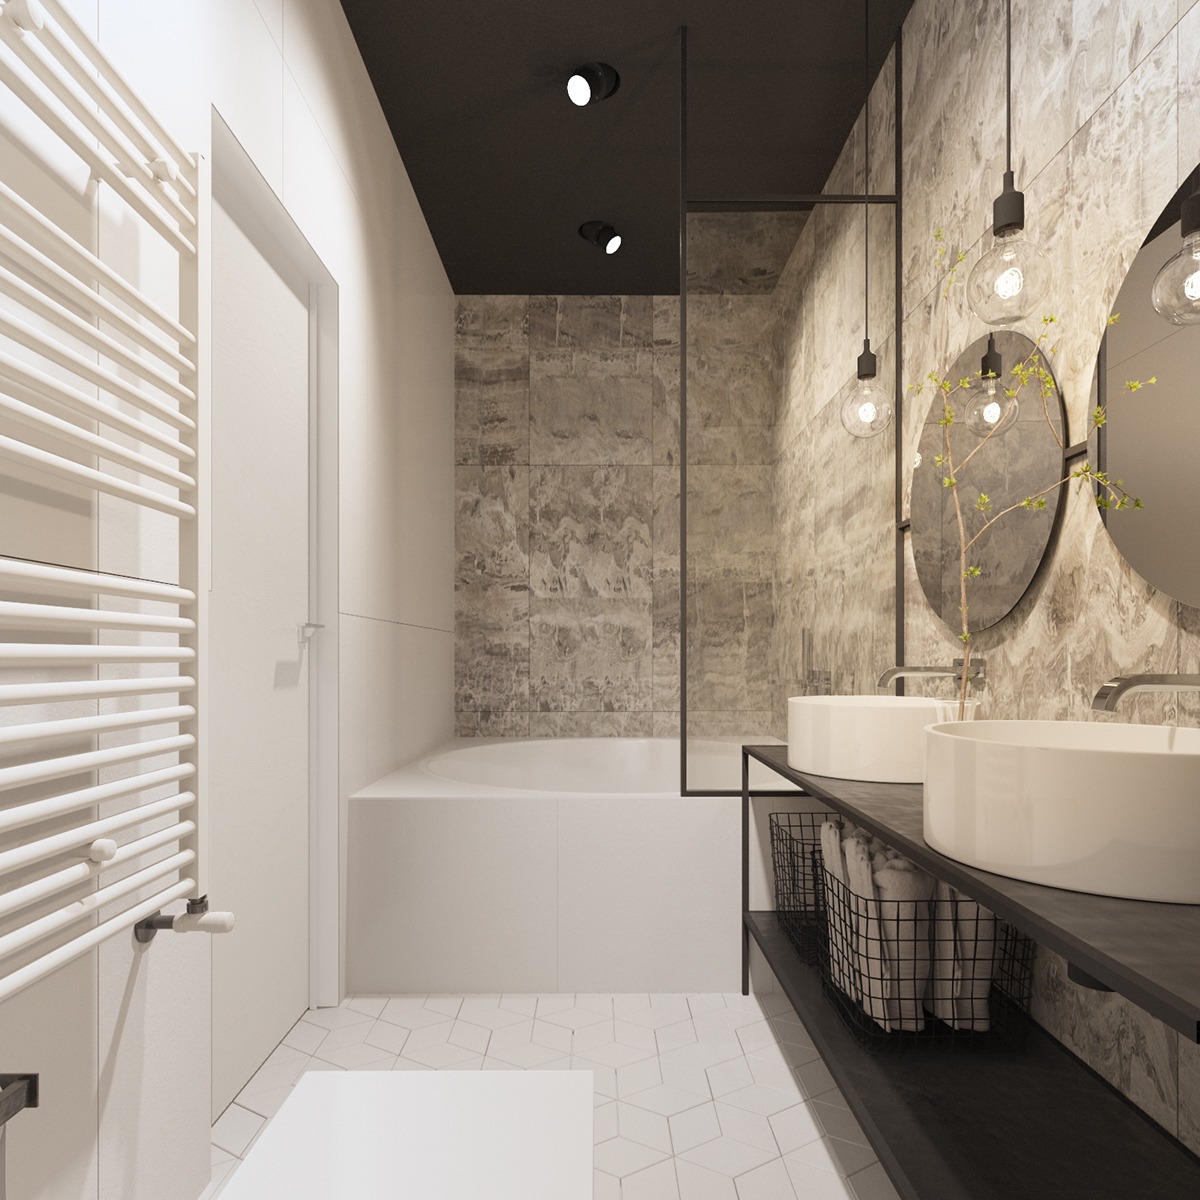 trendy bathroom "width =" 1200 "height =" 1200 "srcset =" https://mileray.com/wp-content/uploads/2020/05/1588515664_37_The-Best-Arrangement-Spacious-Modern-Bathroom-Designs-Decorated-By-Tile.jpg 1200w, https://mileray.com/wp -content / uploads / 2016/10 / Olia-Paliichuk-150x150.jpg 150w, https://mileray.com/wp-content/uploads/2016/10/Olia-Paliichuk-300x300.jpg 300w, https: // myfashionos .com / wp-content / uploads / 2016/10 / Olia-Paliichuk-768x768.jpg 768w, https://mileray.com/wp-content/uploads/2016/10/Olia-Paliichuk-1024x1024.jpg 1024w, https : //mileray.com/wp-content/uploads/2016/10/Olia-Paliichuk-696x696.jpg 696w, https://mileray.com/wp-content/uploads/2016/10/Olia-Paliichuk-1068x1068. jpg 1068w, https://mileray.com/wp-content/uploads/2016/10/Olia-Paliichuk-420x420.jpg 420w "sizes =" (maximum width: 1200px) 100vw, 1200px